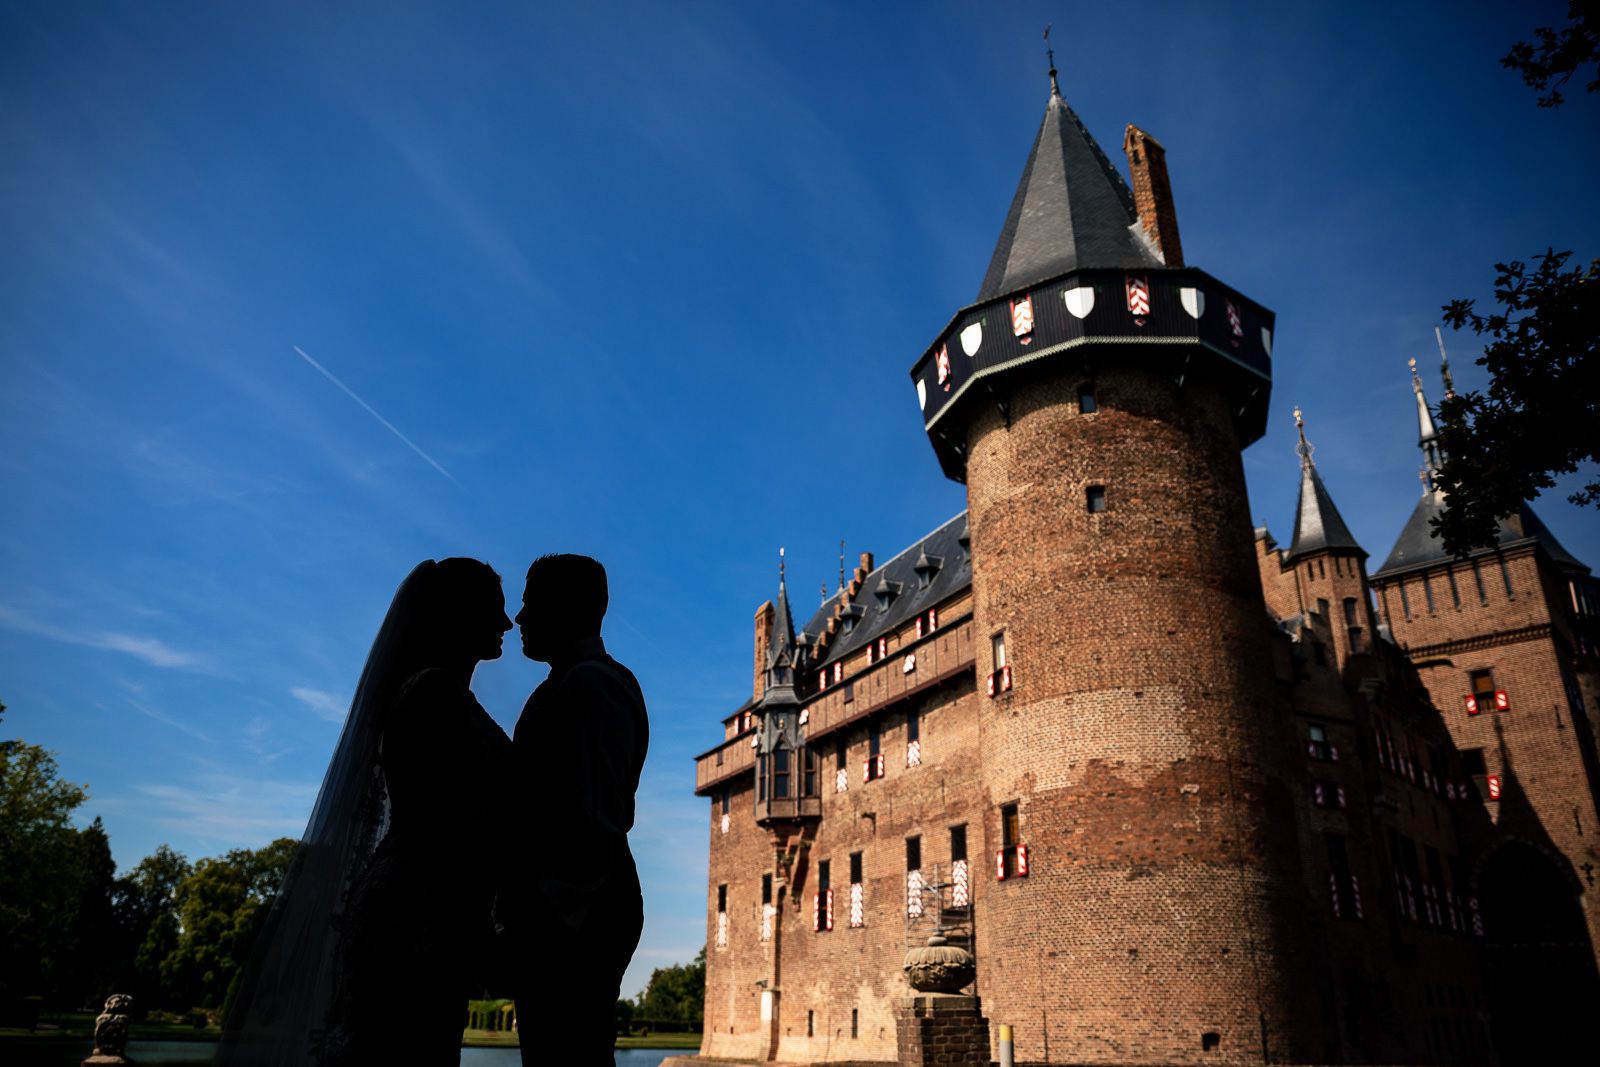 Trouwfotograaf Kasteel de Haar silhouette shote met kasteel